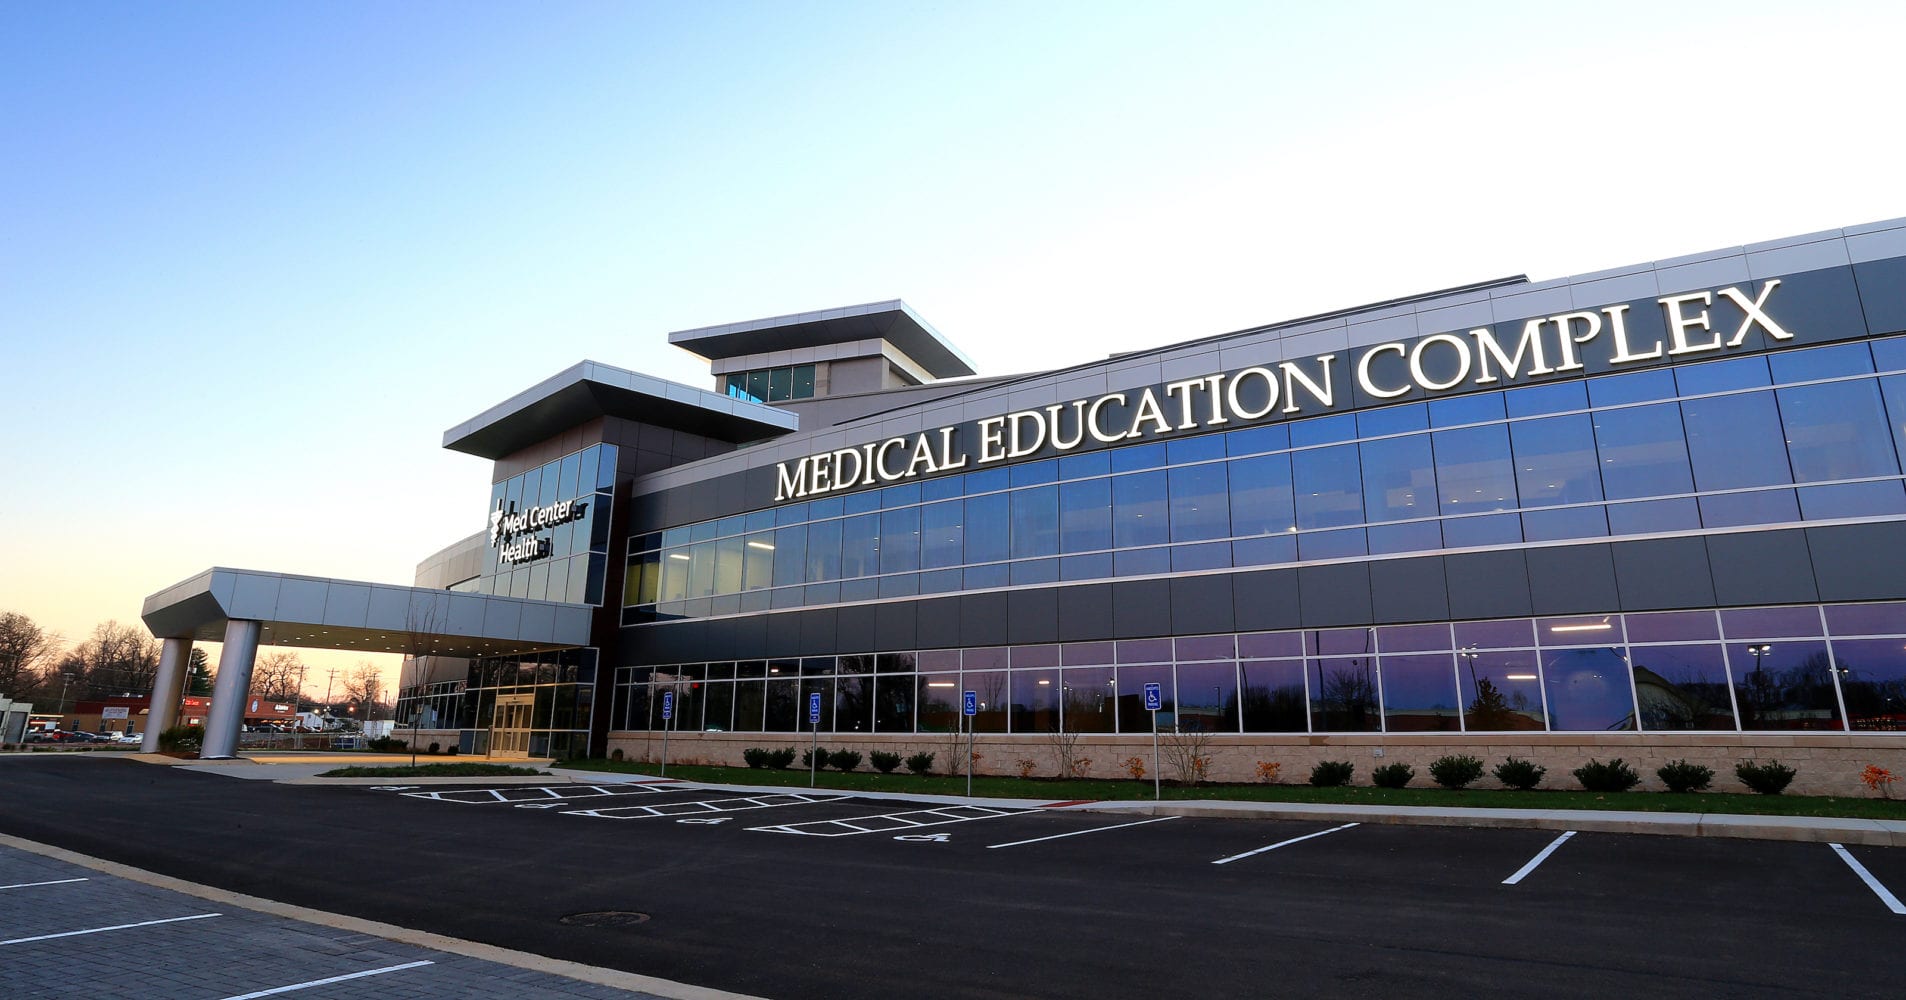 University of Kentucky Medical Education Complex